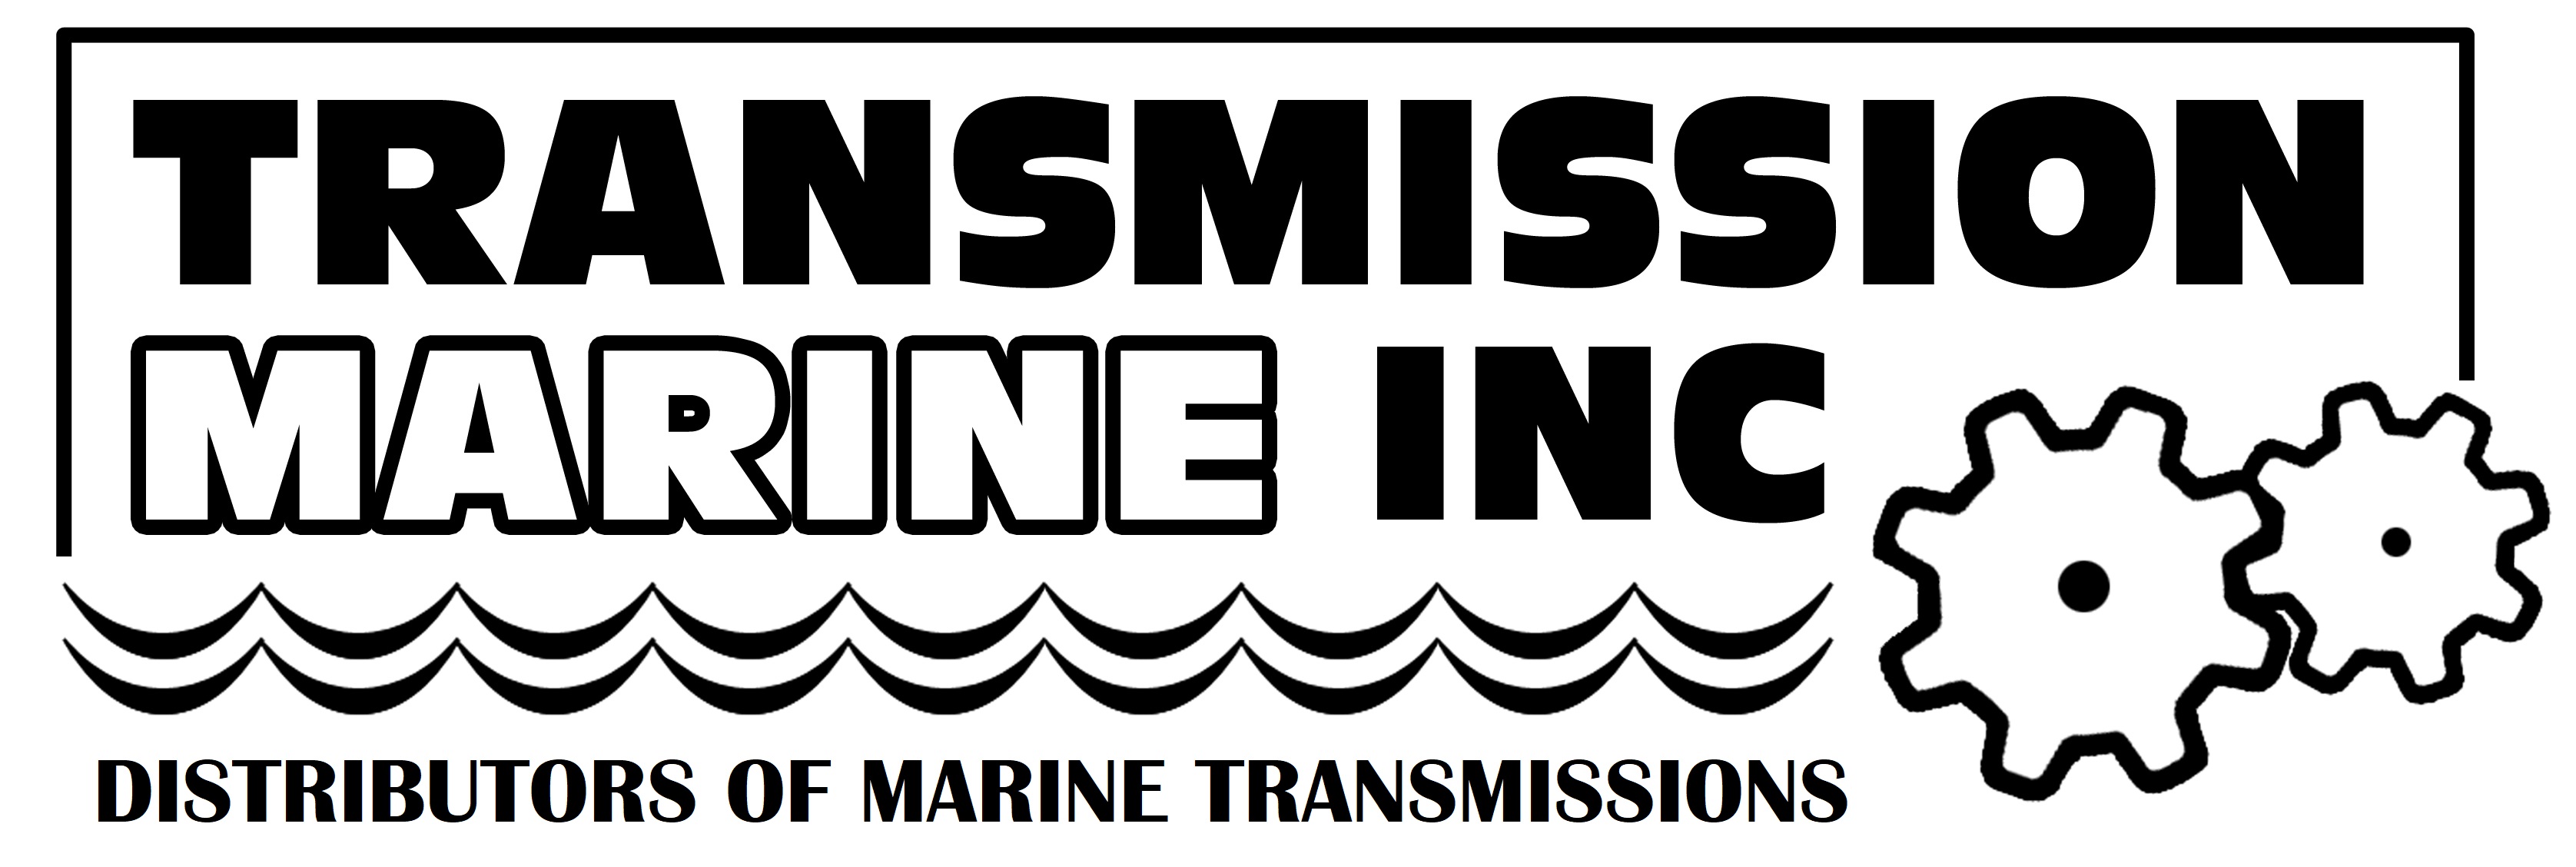 Transmission Marine, Inc.